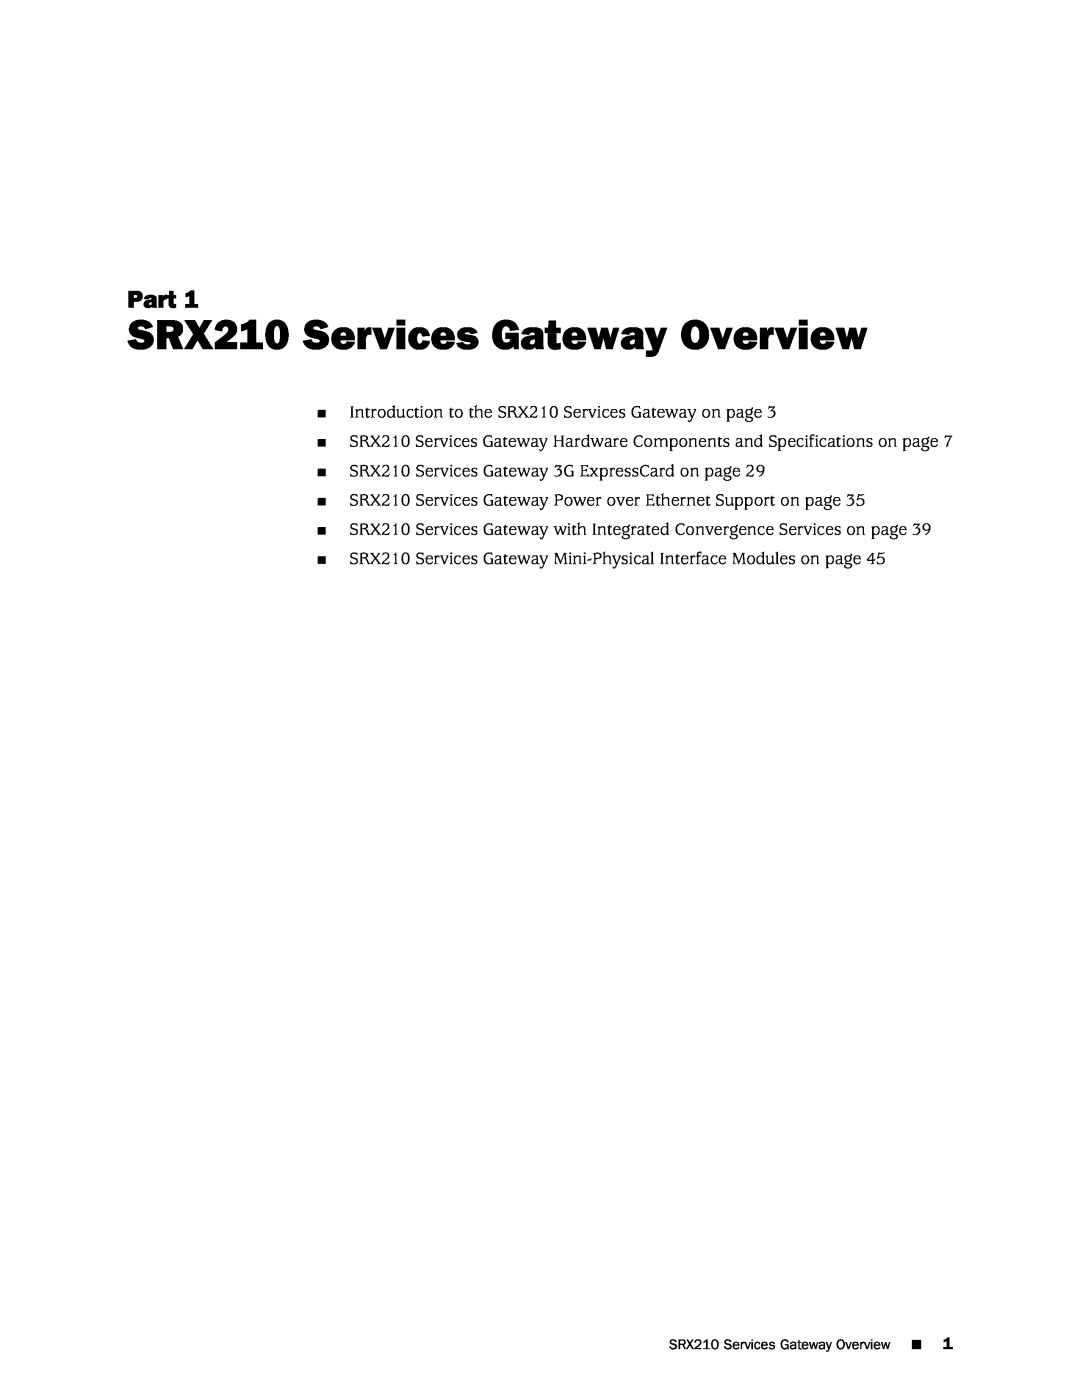 Juniper Networks SRX 210 manual SRX210 Services Gateway Overview, Part 